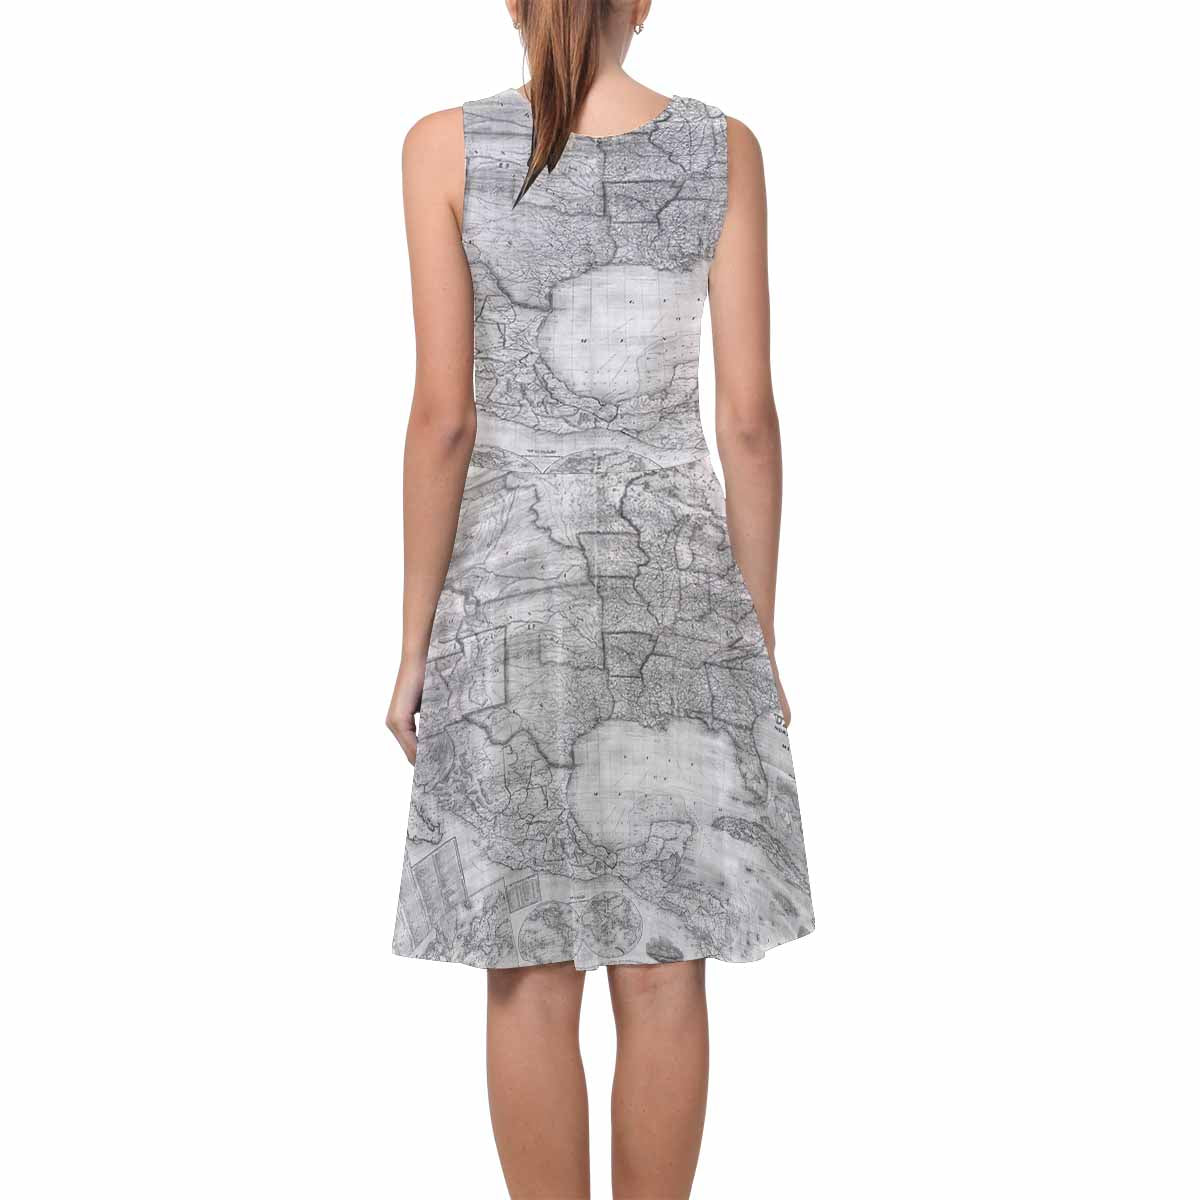 Antique Map casual summer dress, MODEL 09534, design 19